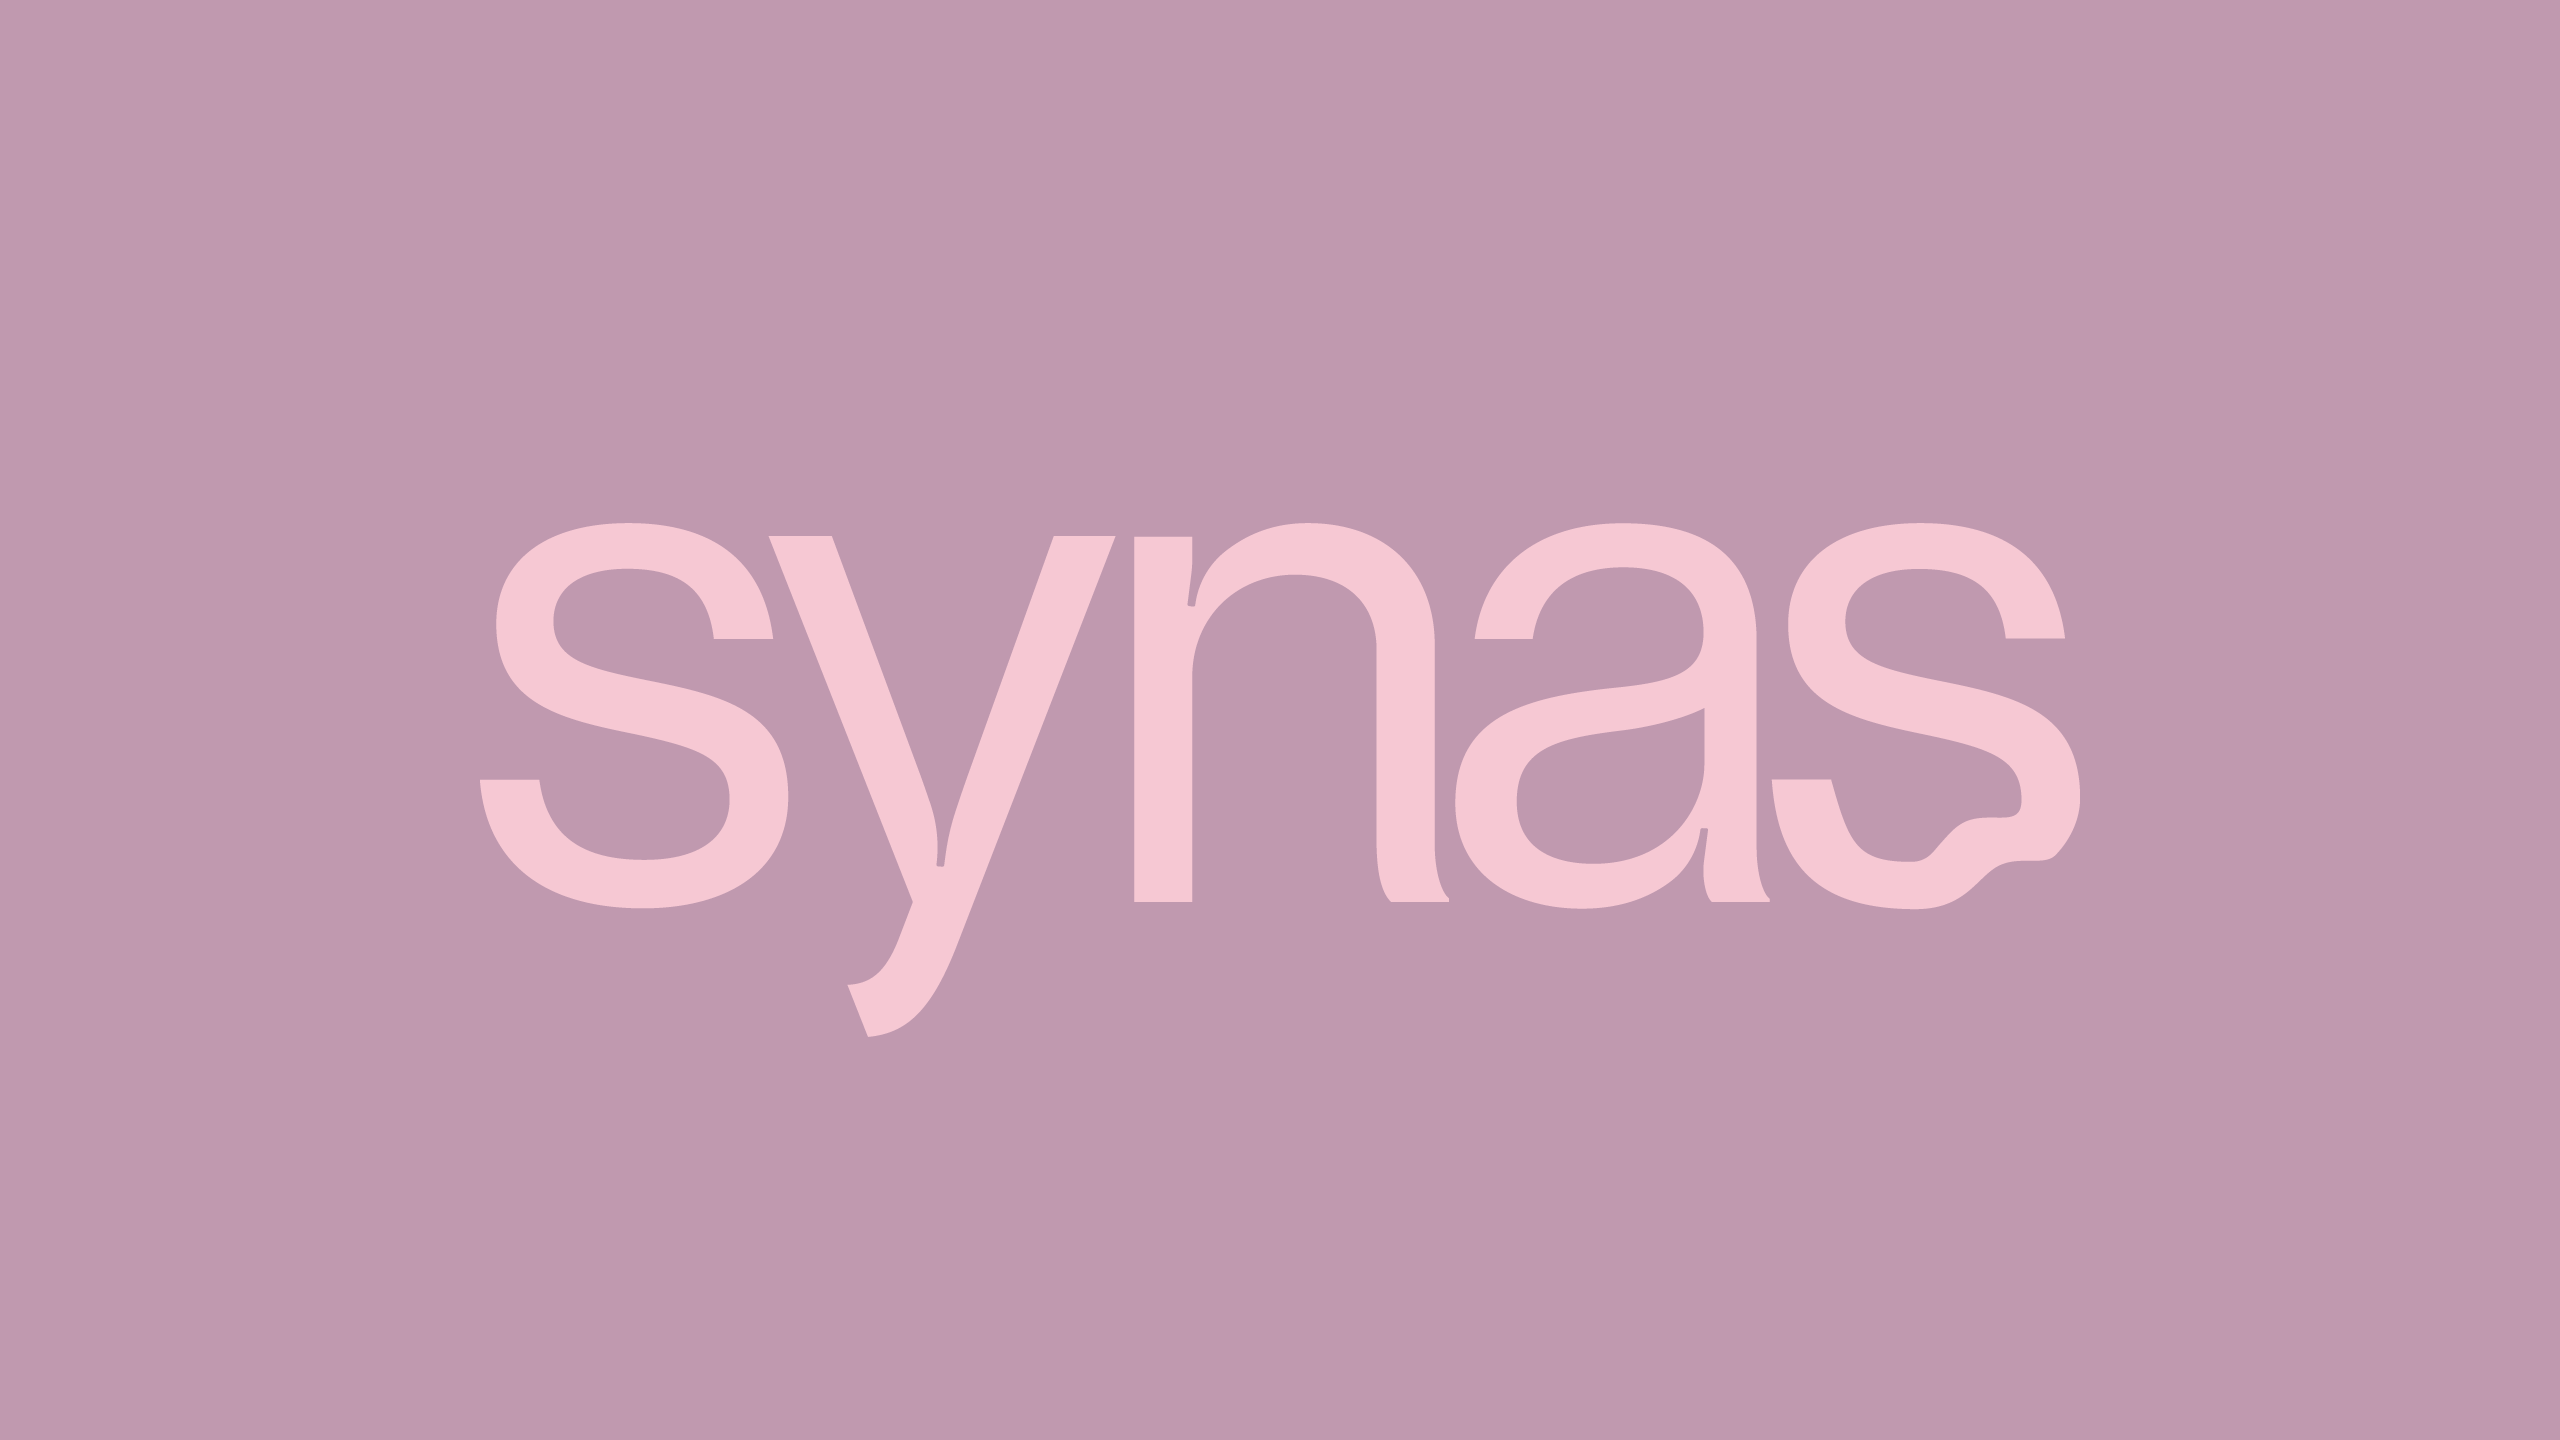 Synas-logo-pink-bg-lilac